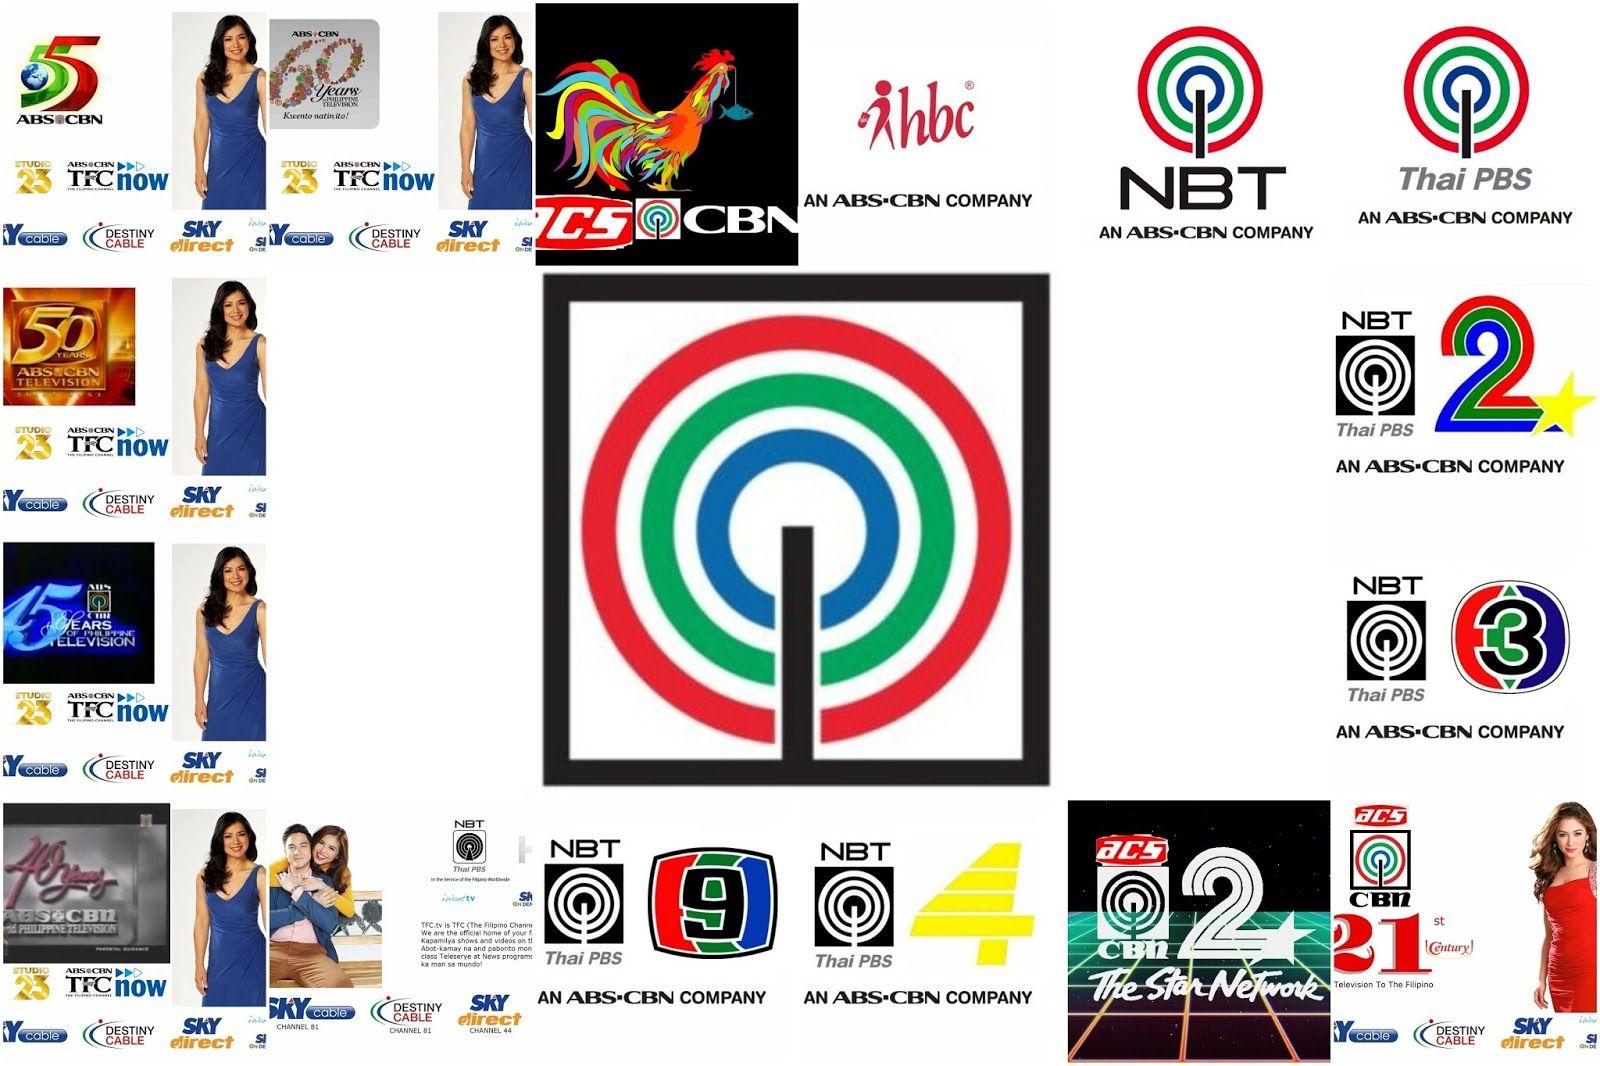 ABS-CBN Logo - Muhlach Media Corporation: NBT-PBS to ABS-CBN Anniversary logo